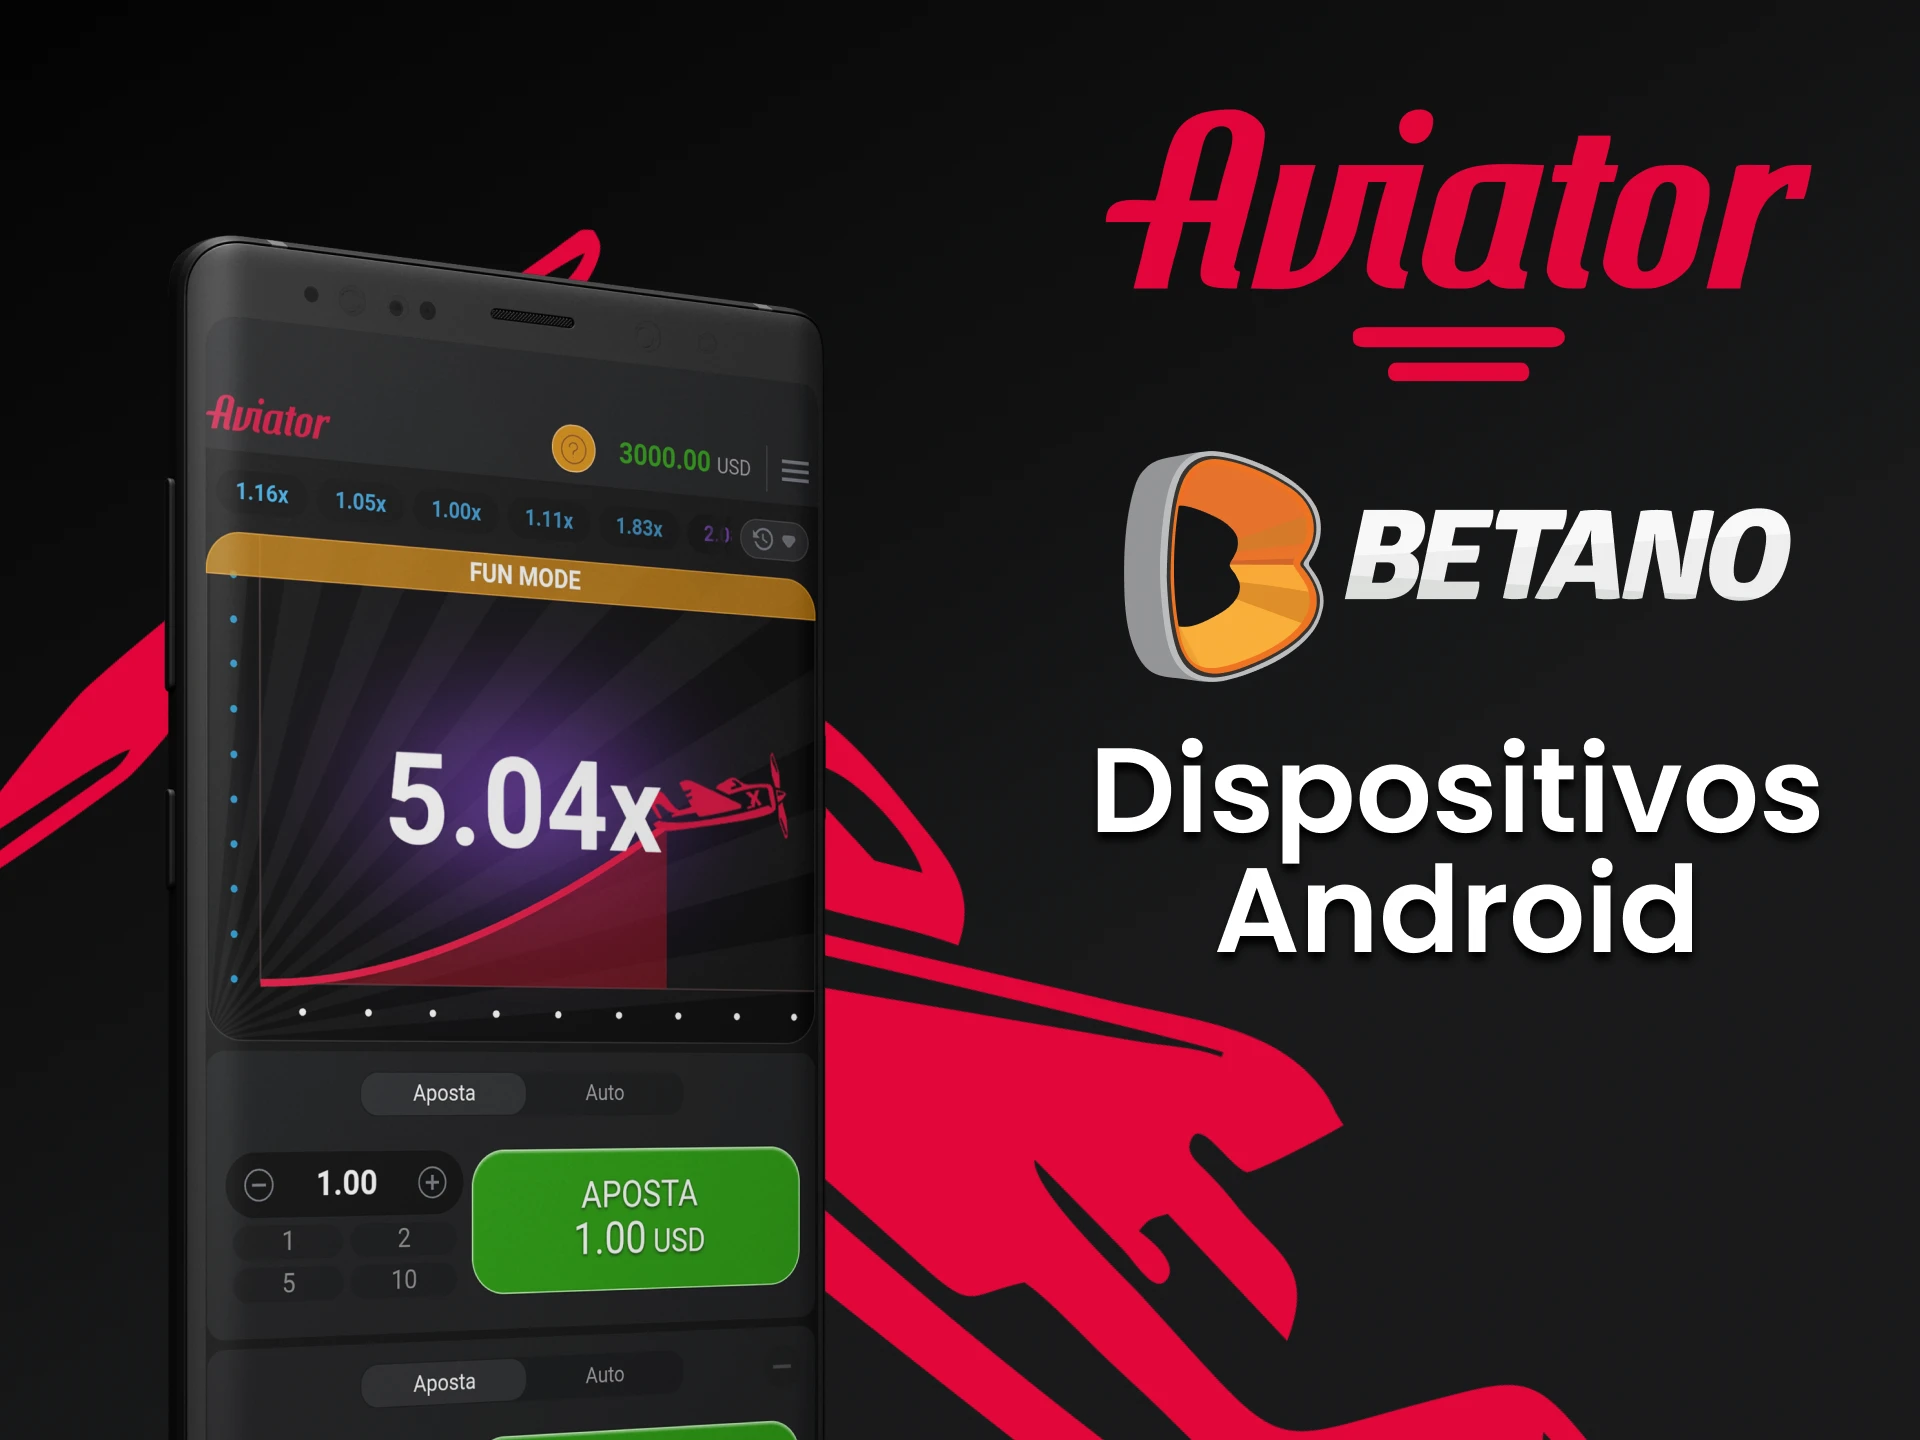 Use seu dispositivo Android para jogar Aviator no aplicativo Betano.